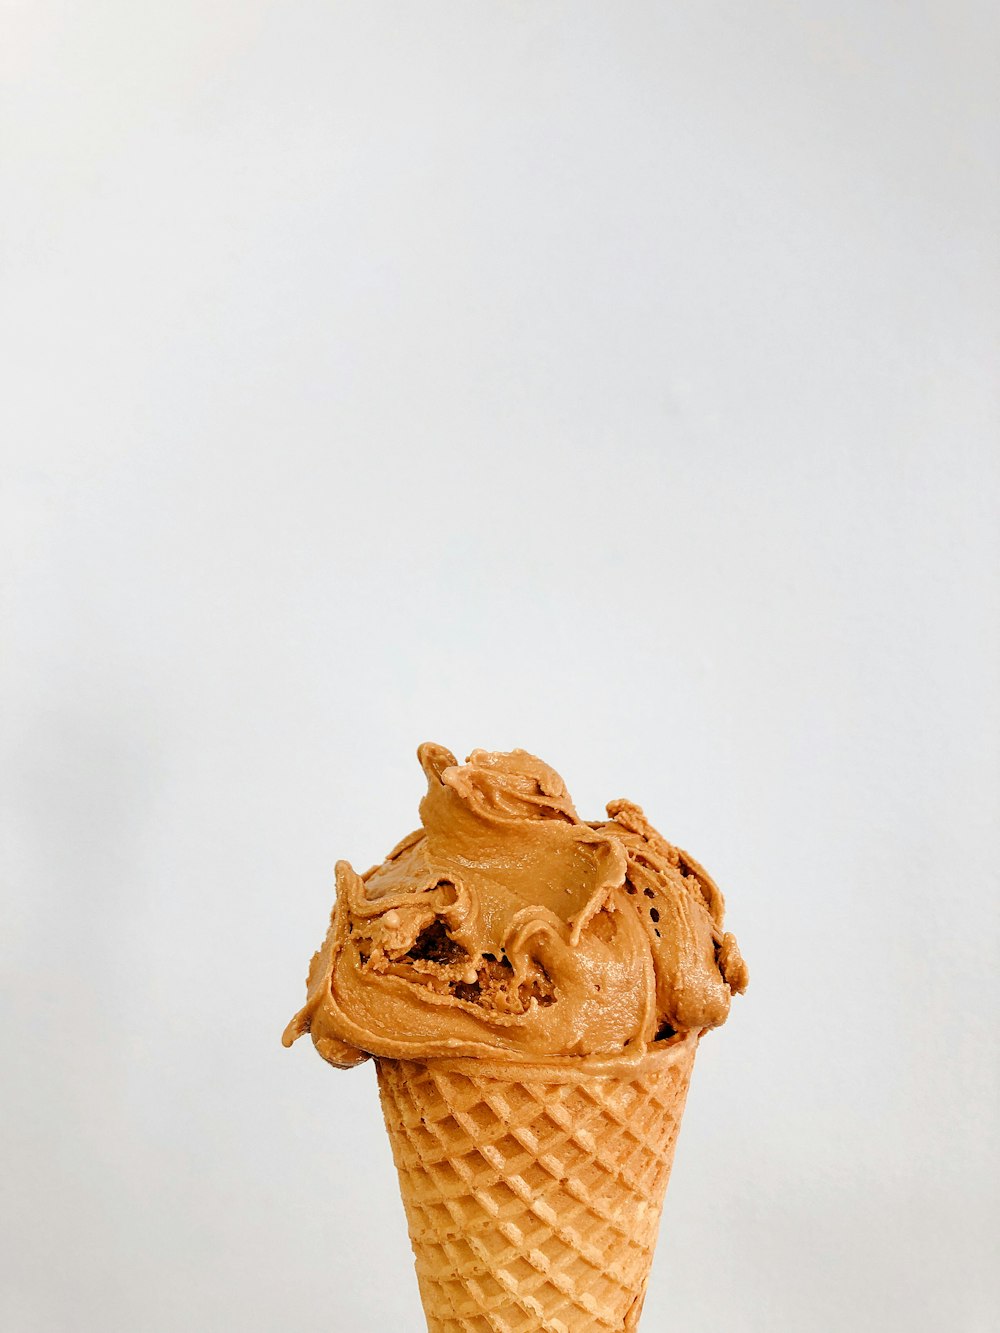 cone of mocha ice cream